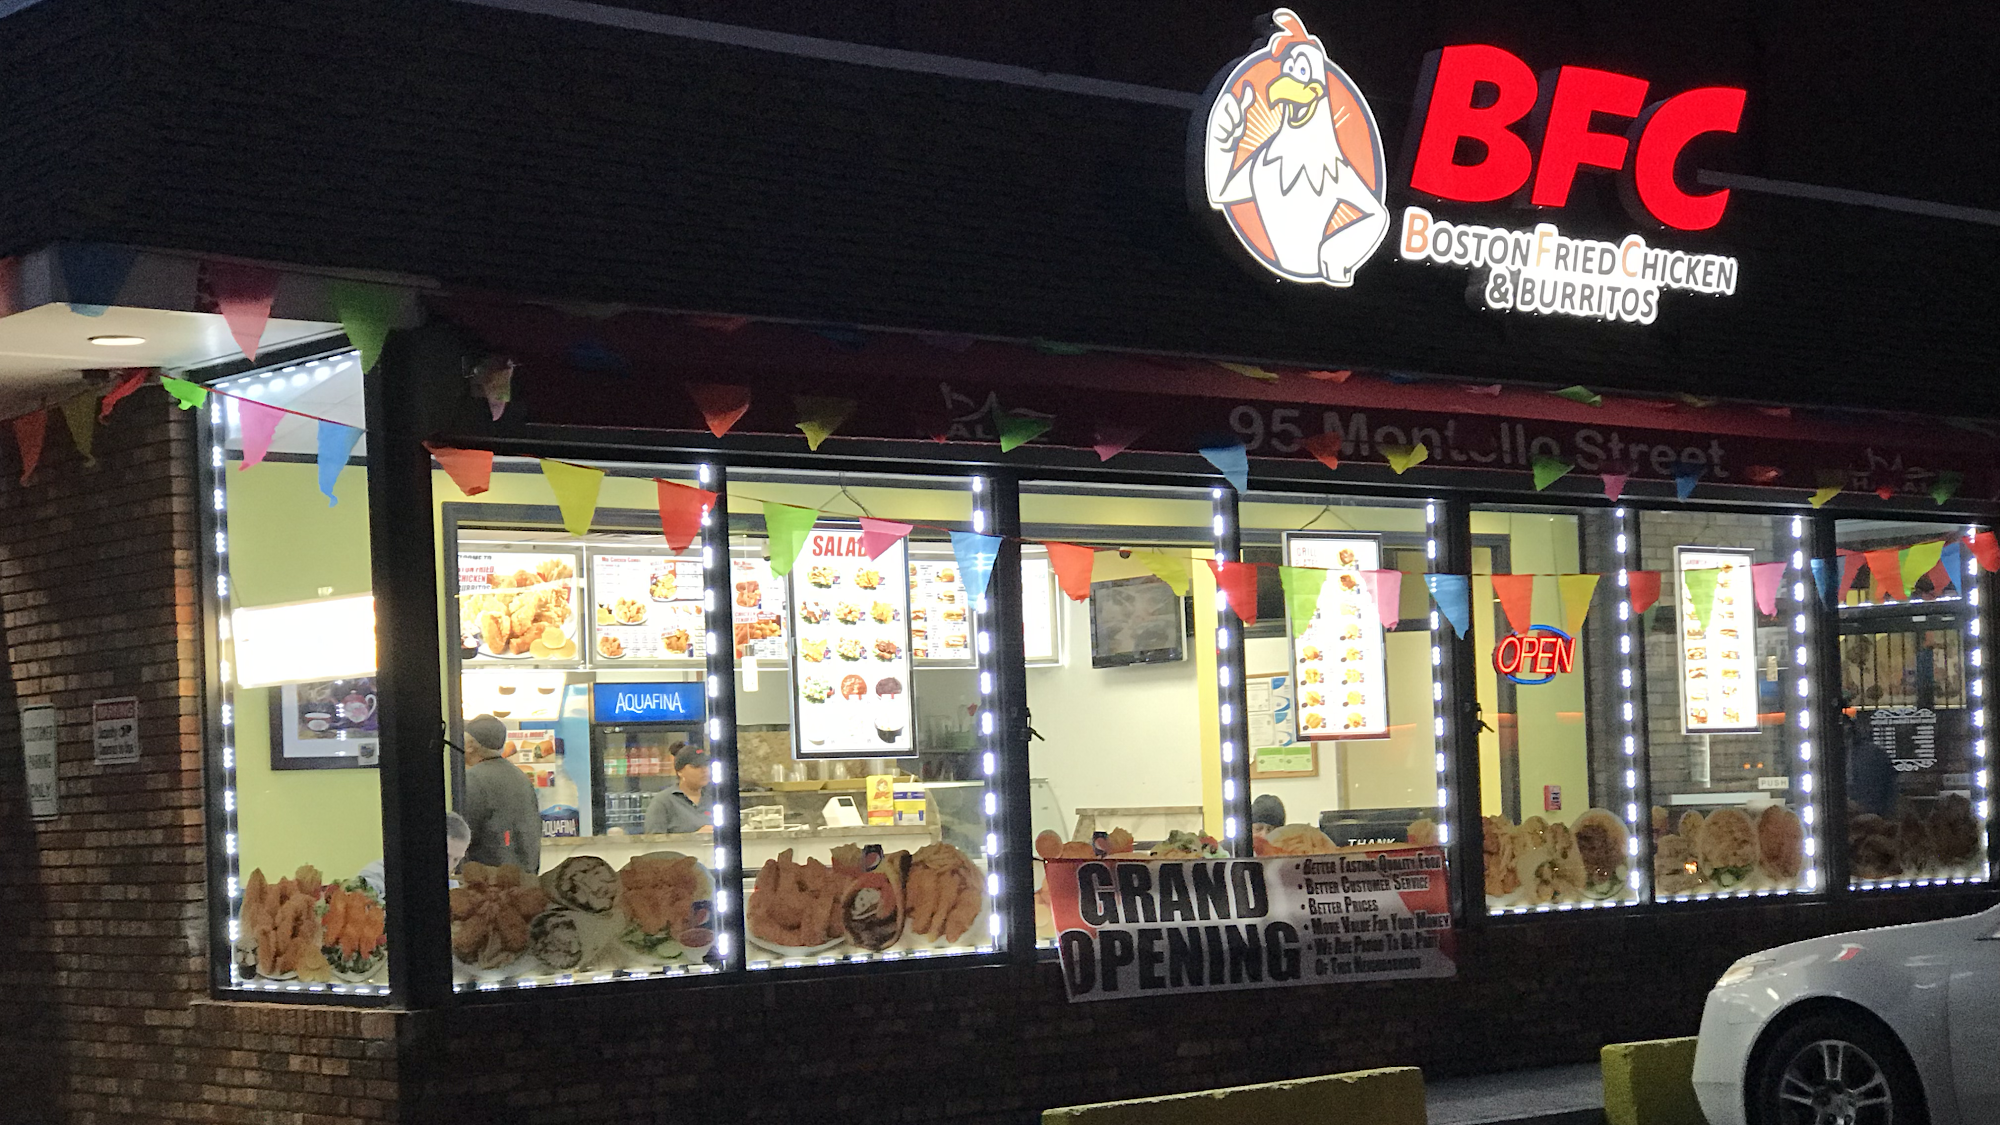 BFC: Boston Fried Chicken And Burritos